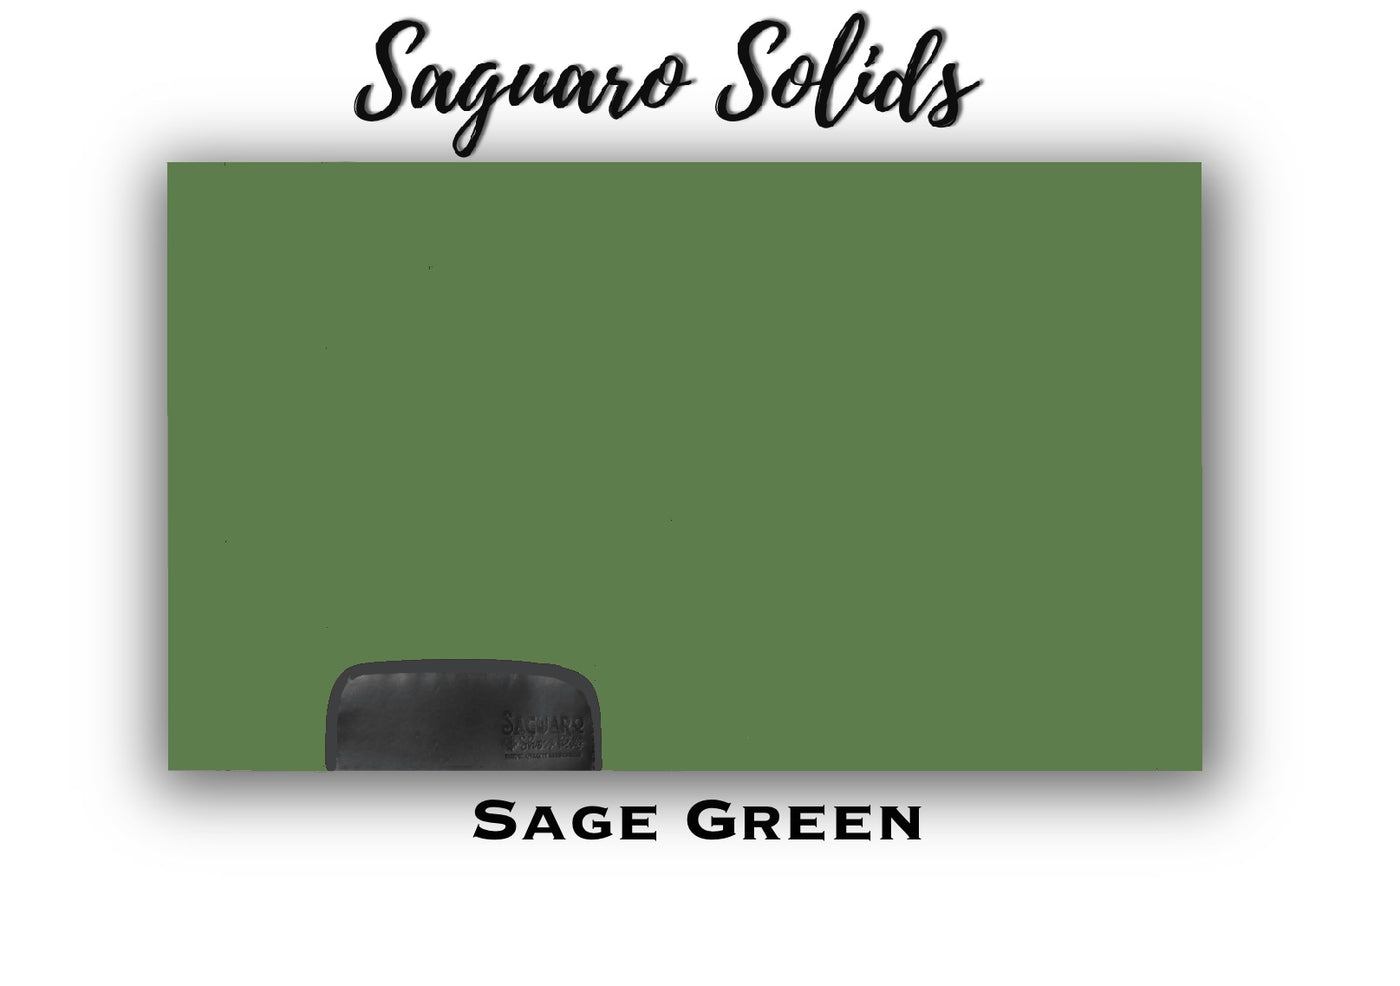 Saguaro Solid "Sage Green" Show Pad (SEMI-CUSTOM)